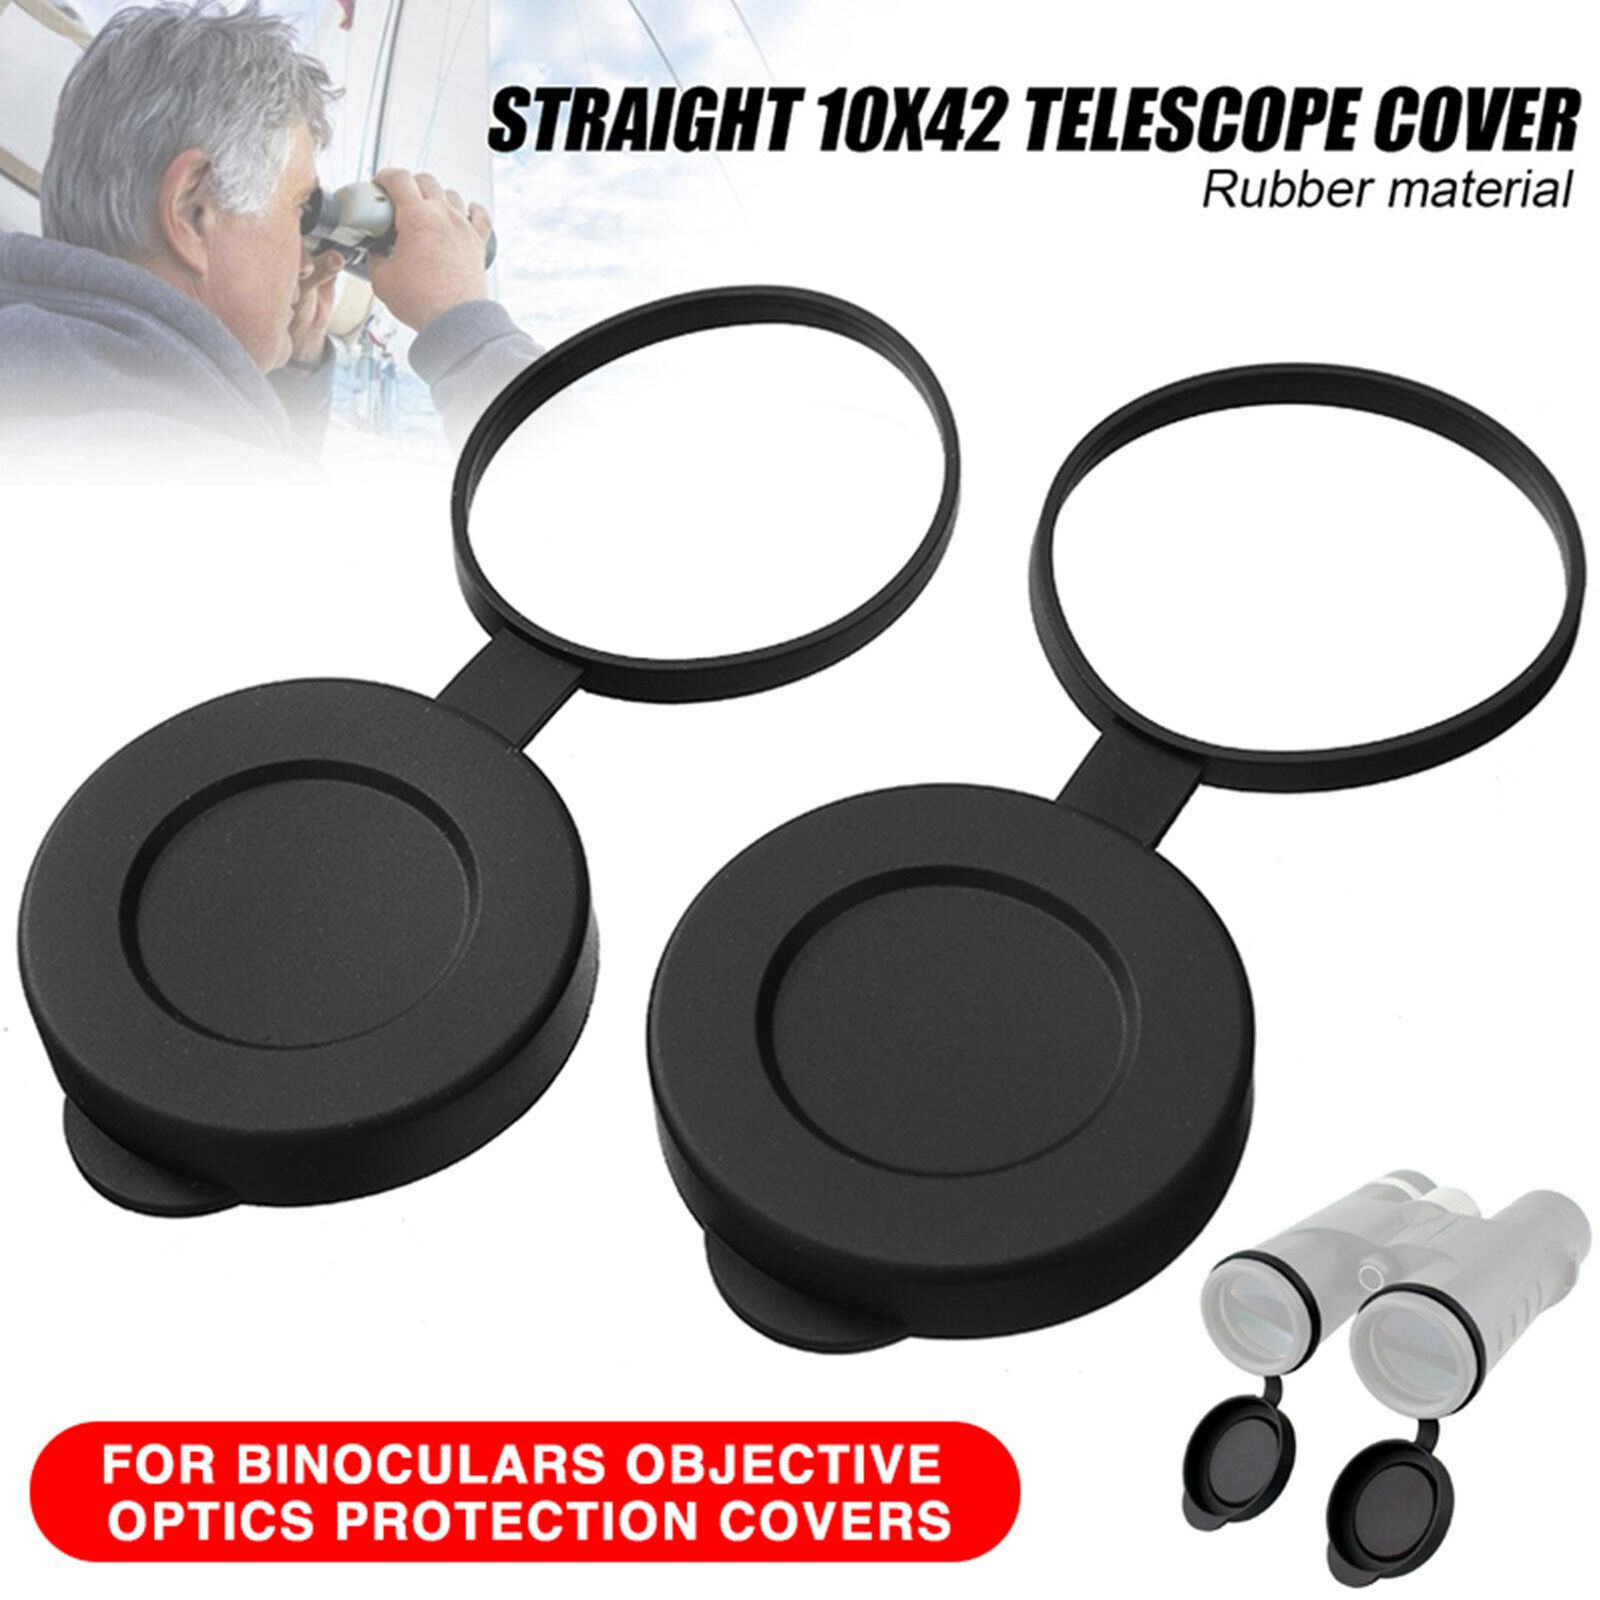 2PCS 10x42 Binoculars Rubber Len Cover Caps Protection Len Covers for Binoculars